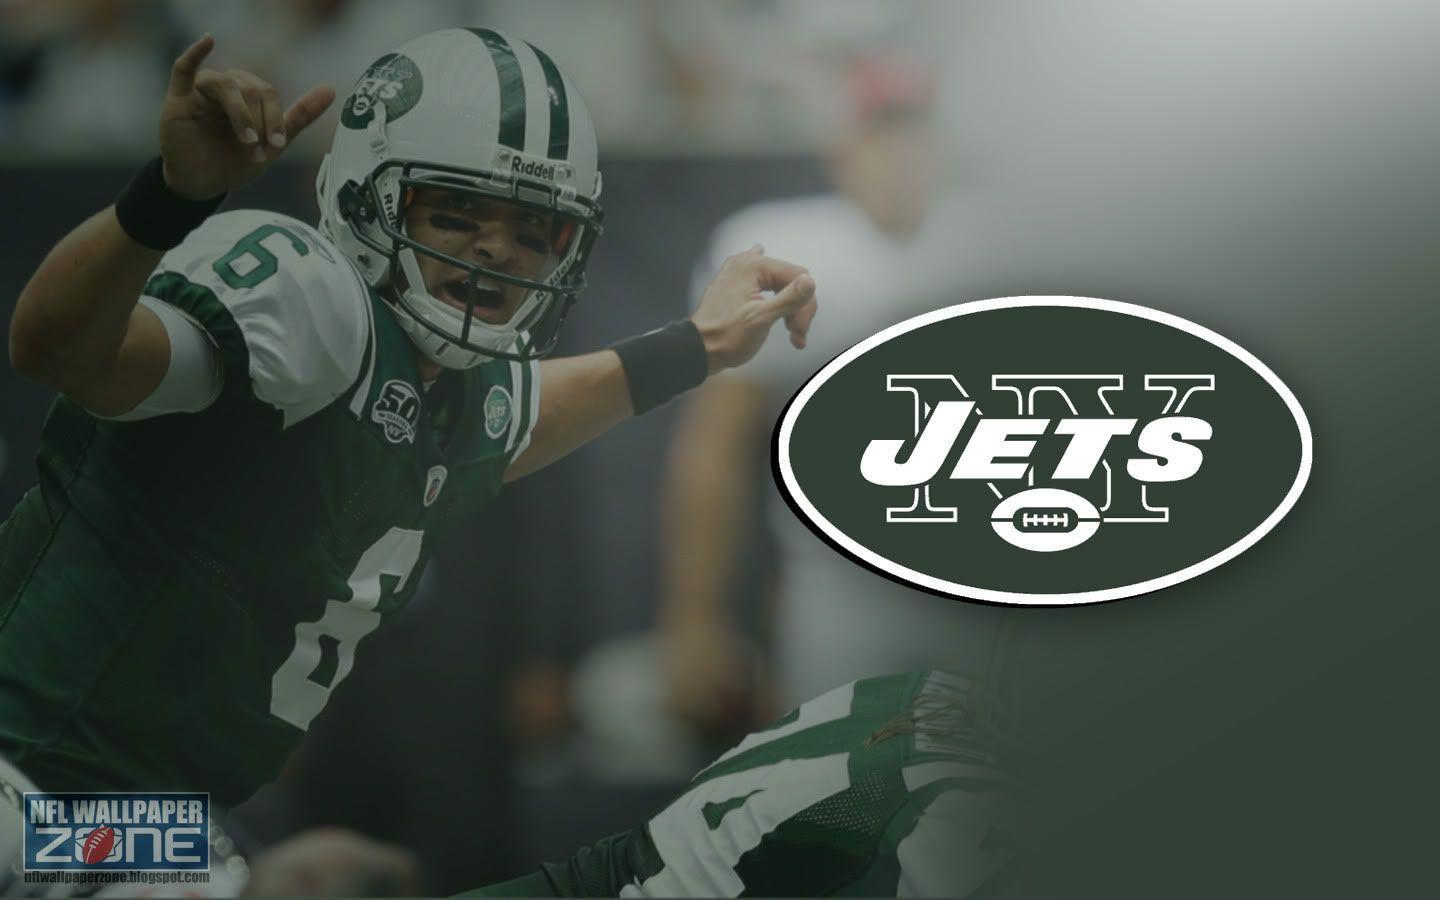 NFL Wallpaper Zone: NY Jets Wallpaper York Jets Logo Desktop